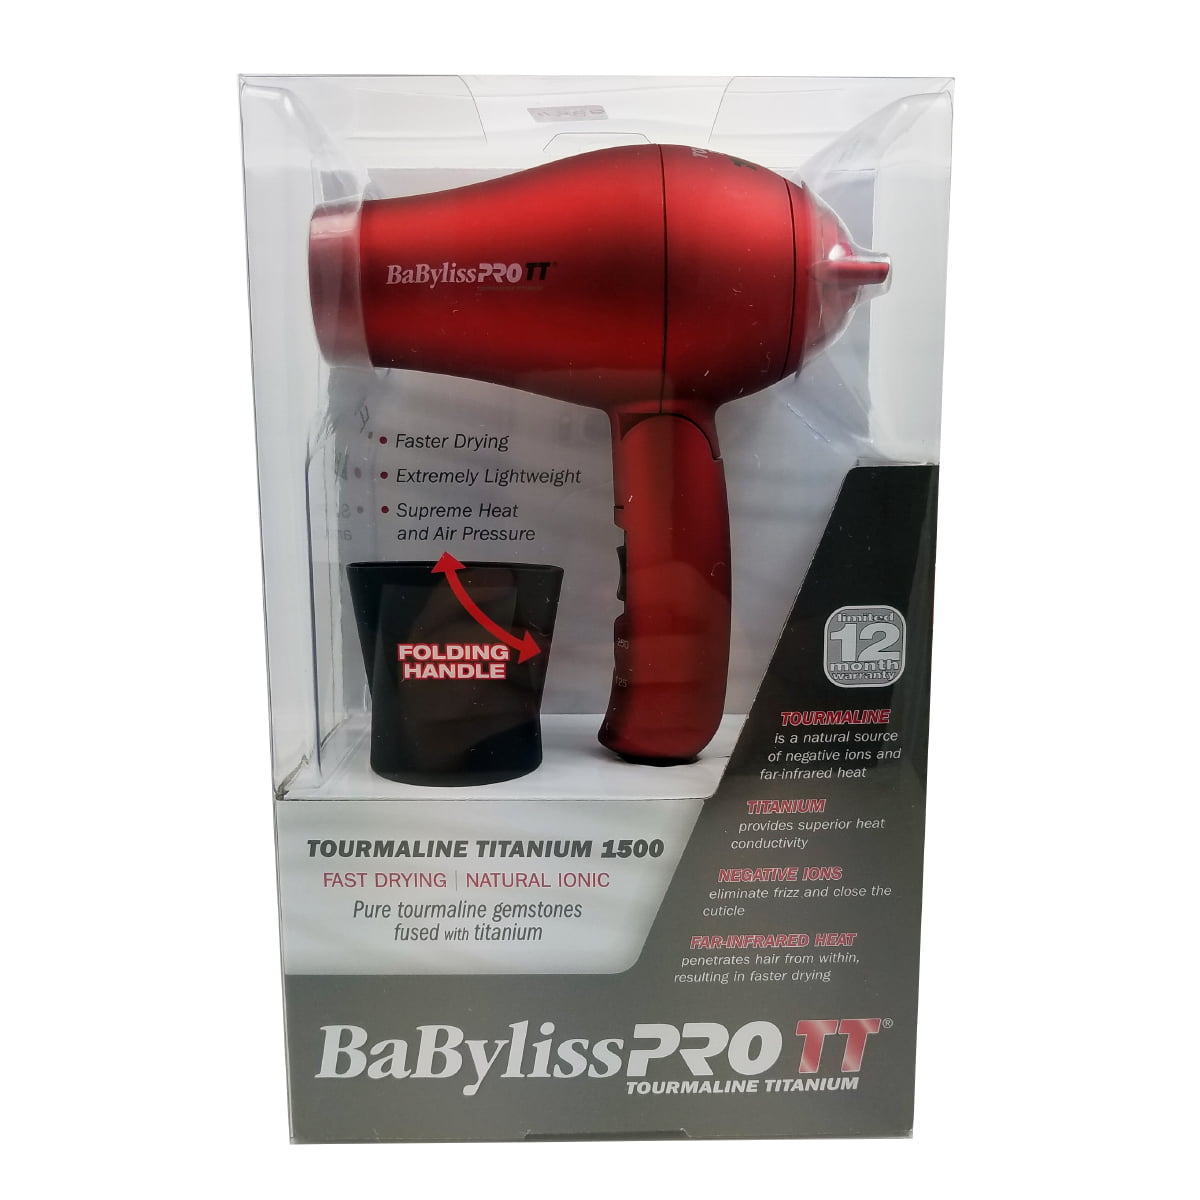 ($39.99 Value) Babyliss Pro TT Tourmaline Titanium Travel Hair Dryer, Red